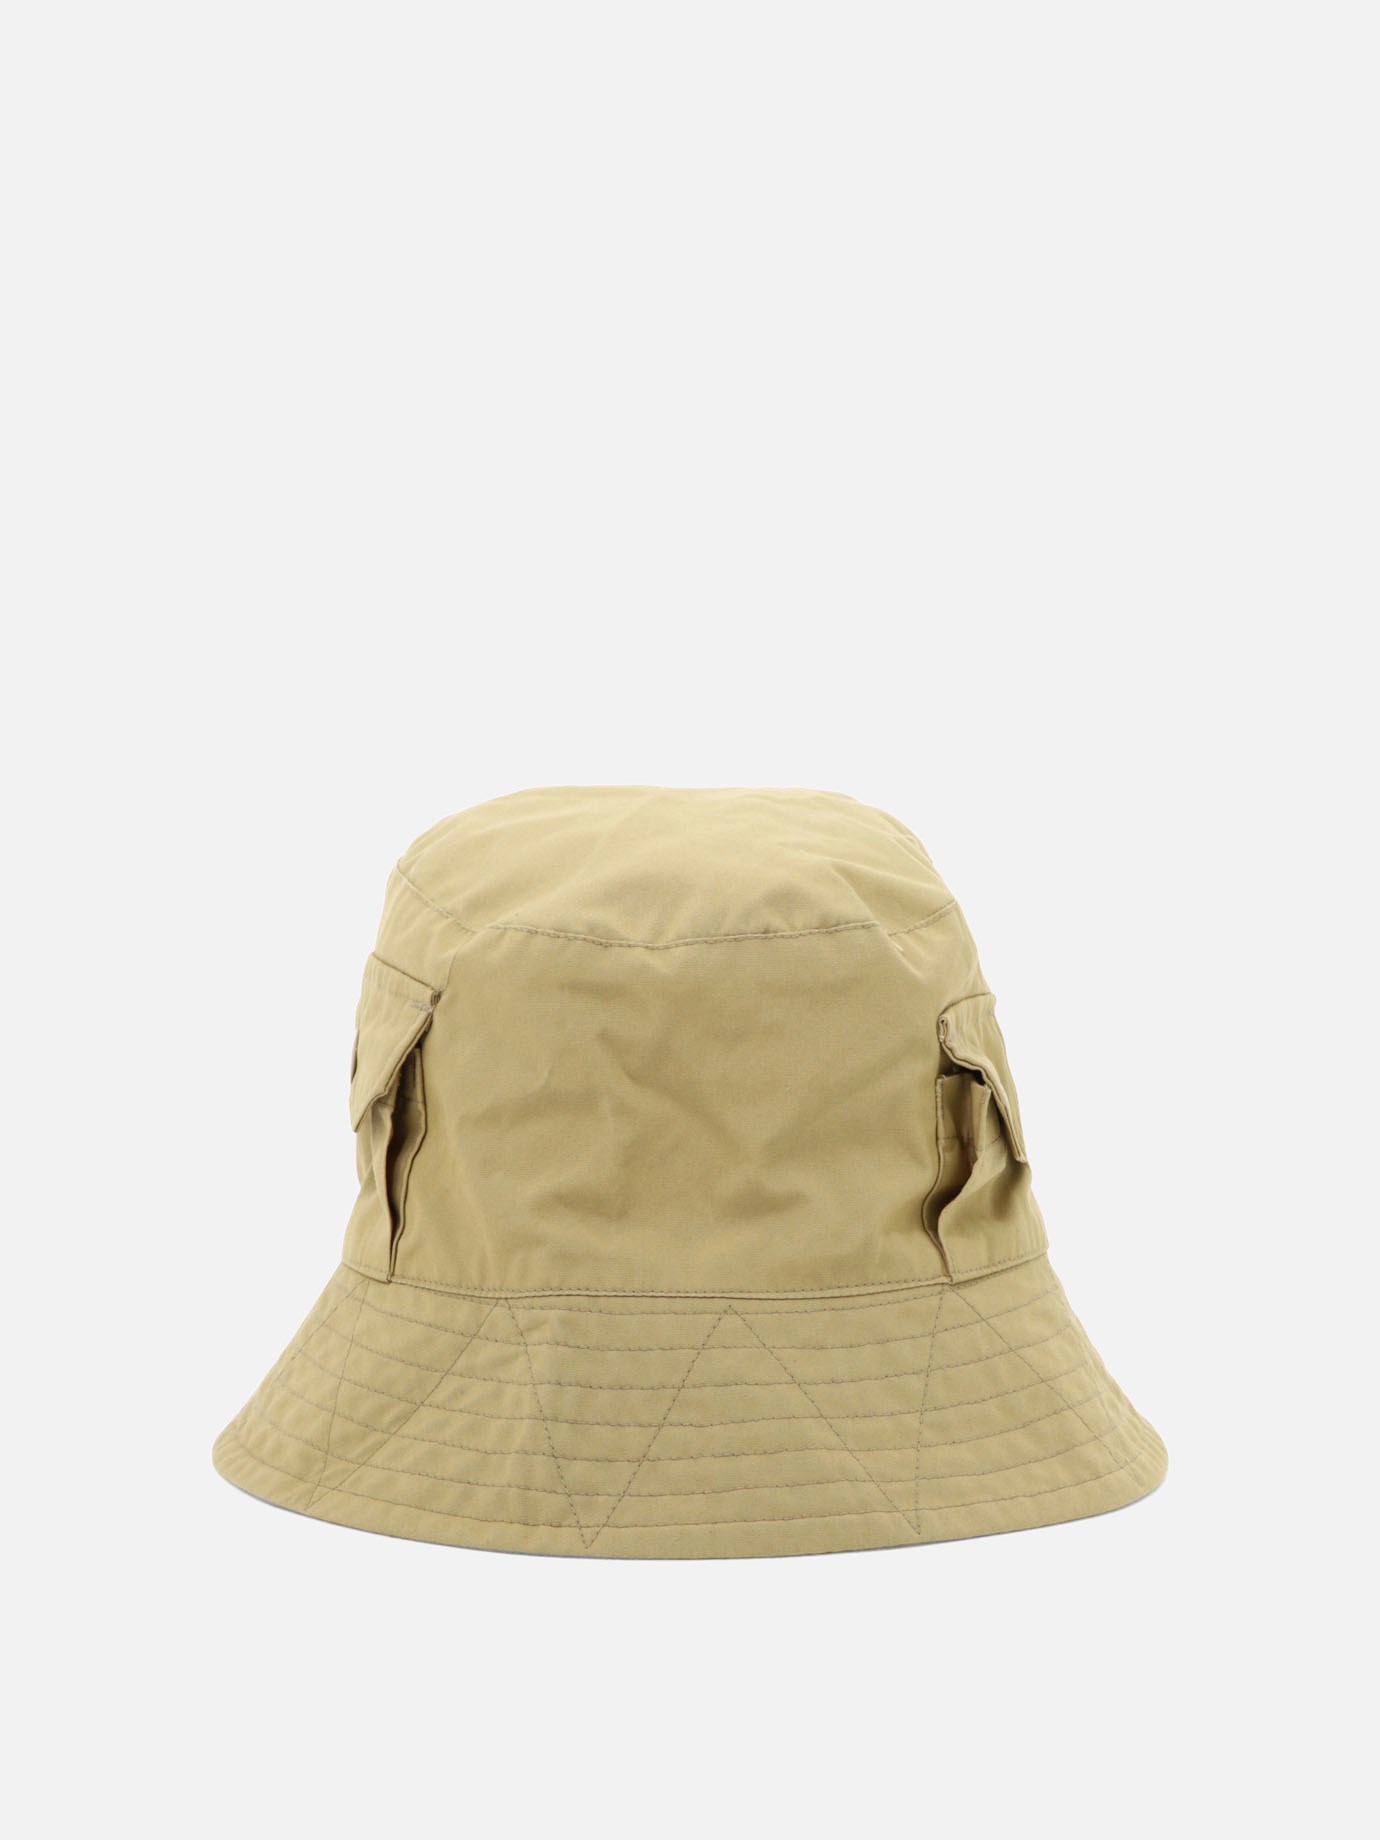  Explorer  bucket hatby Engineered Garments - 1